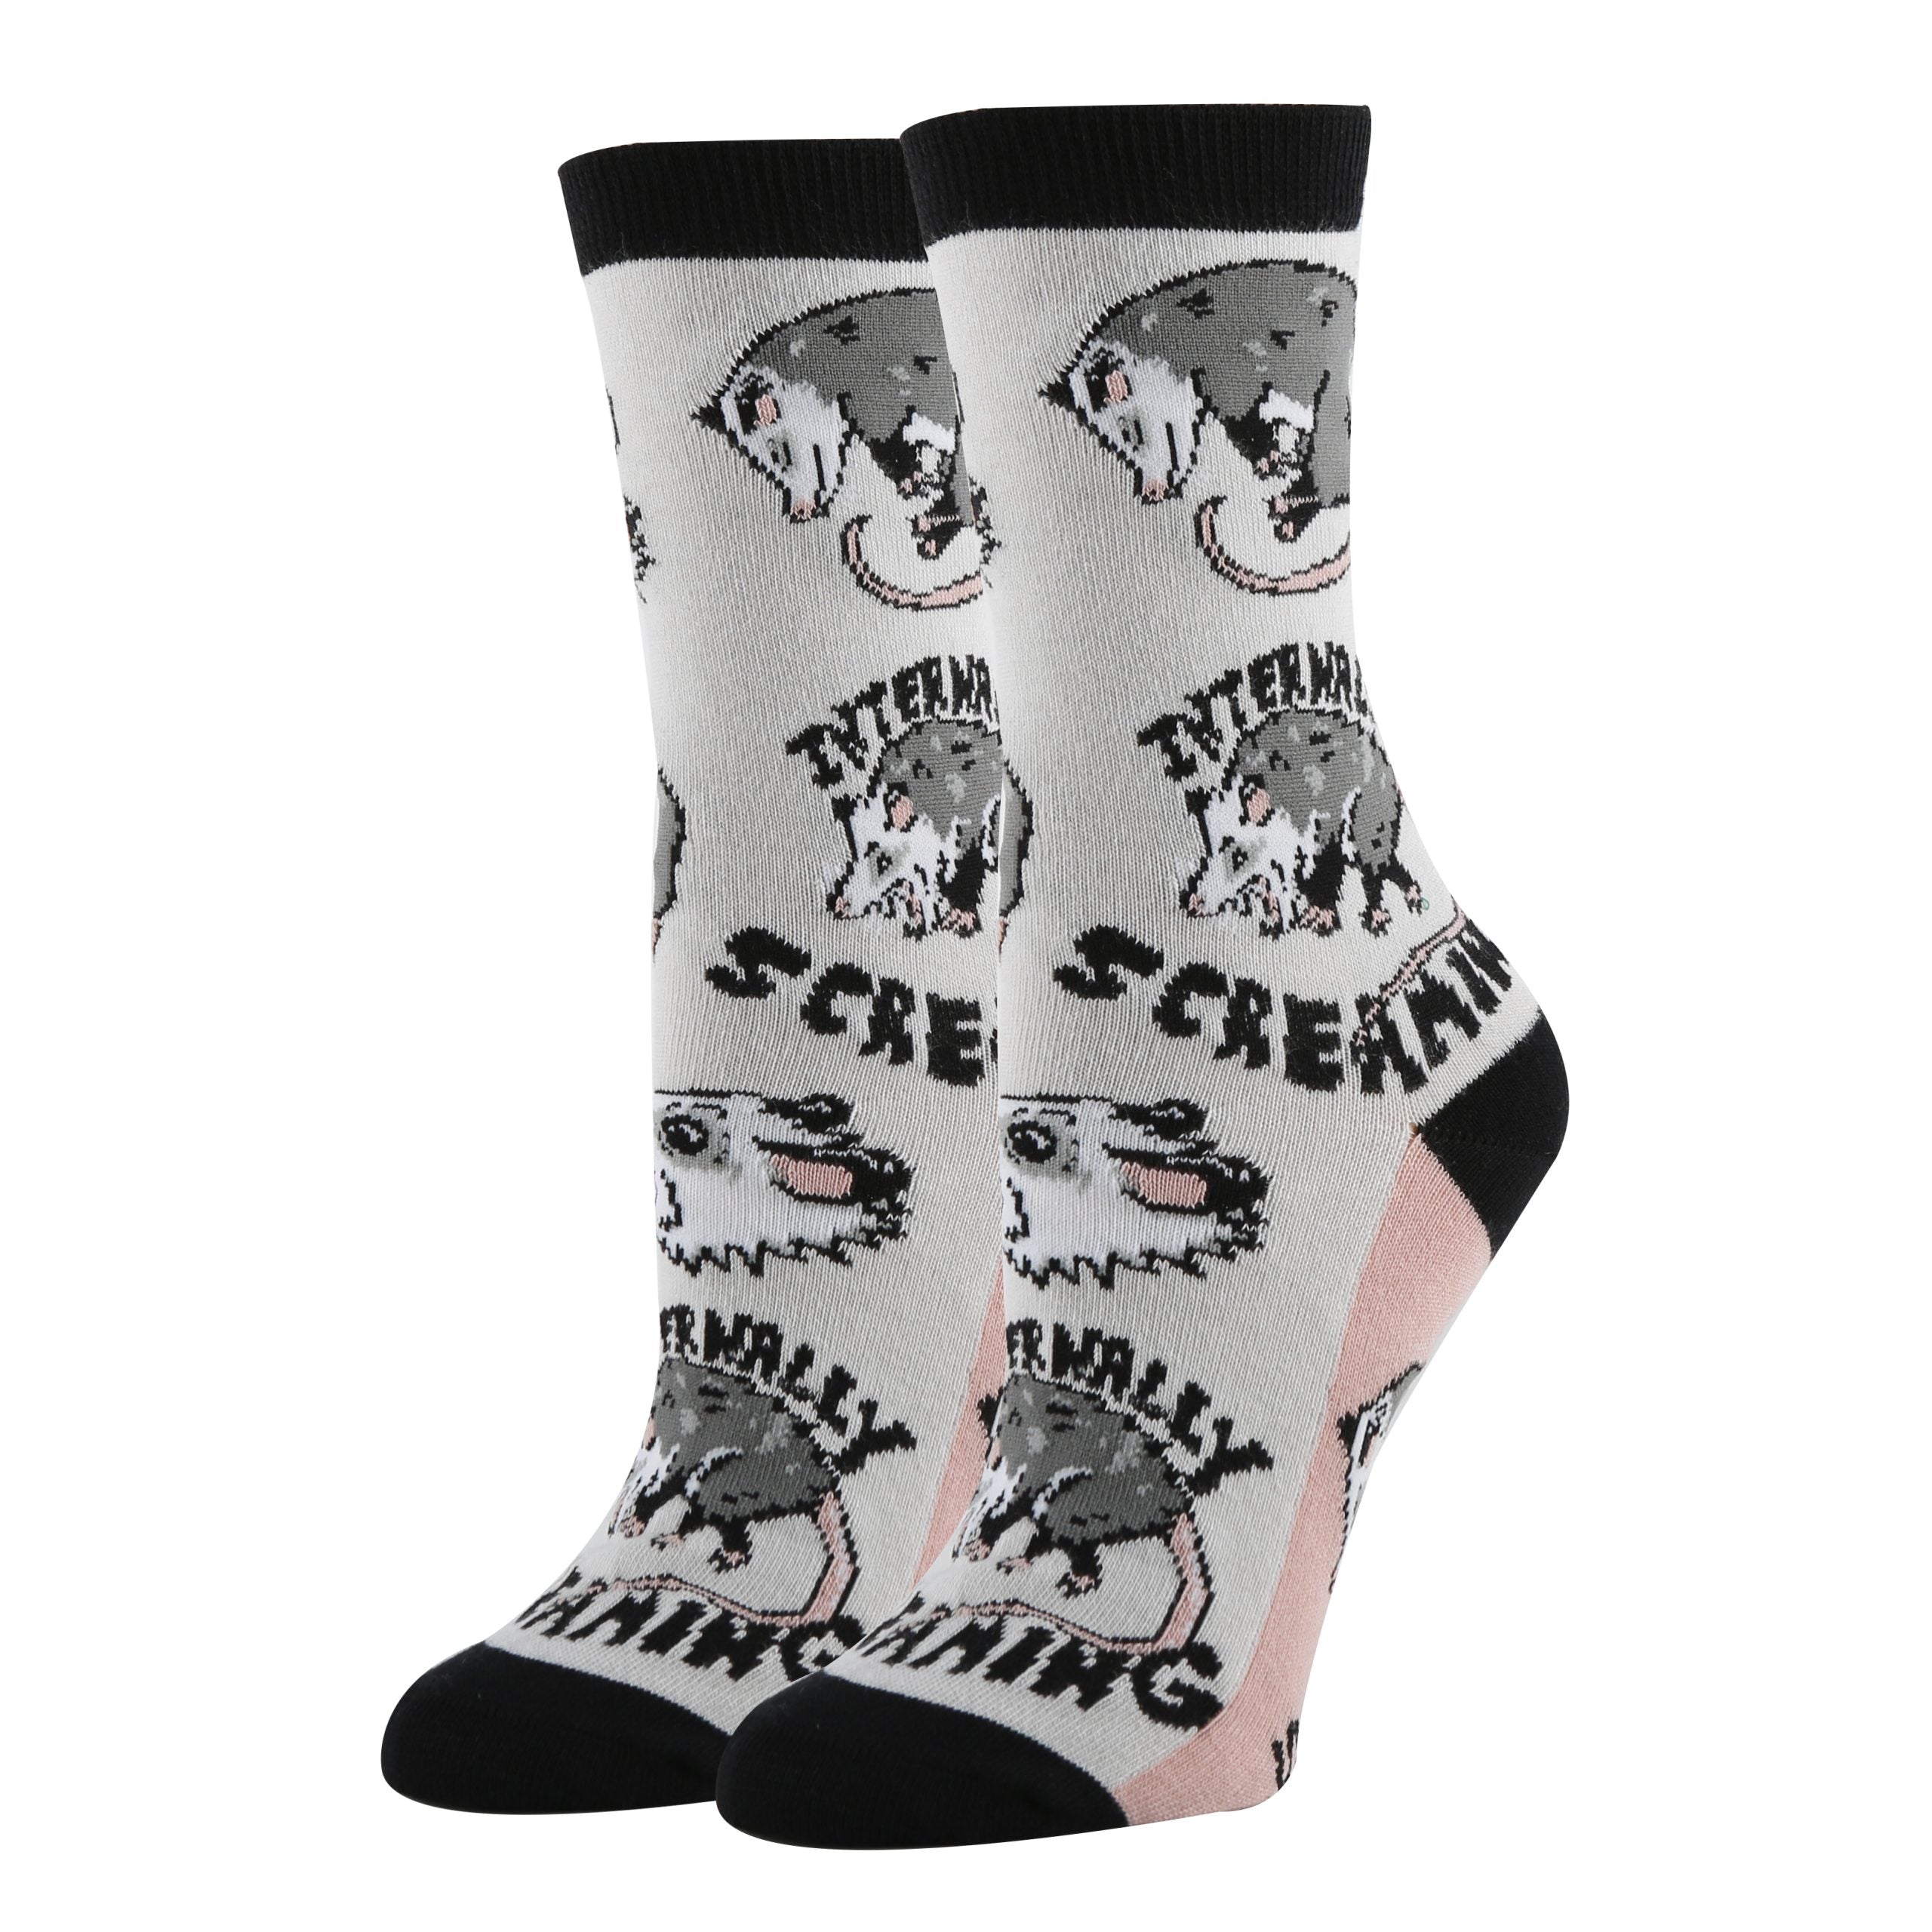 Stressed Opossum Socks | Funny Crew Socks for Women